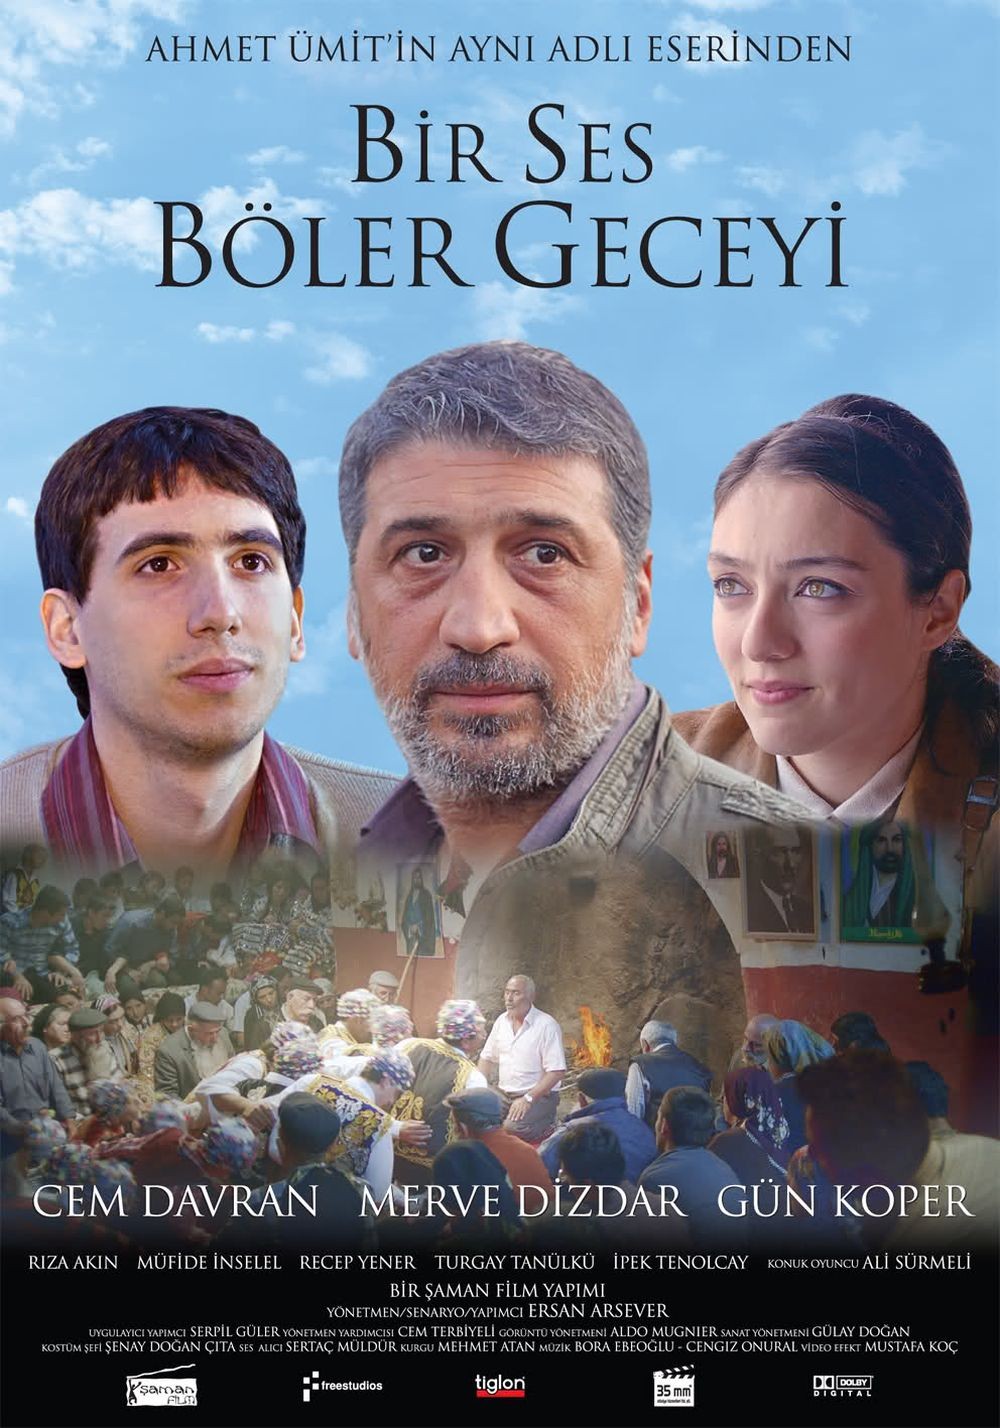 Extra Large Movie Poster Image for Bir ses böler geceyi 